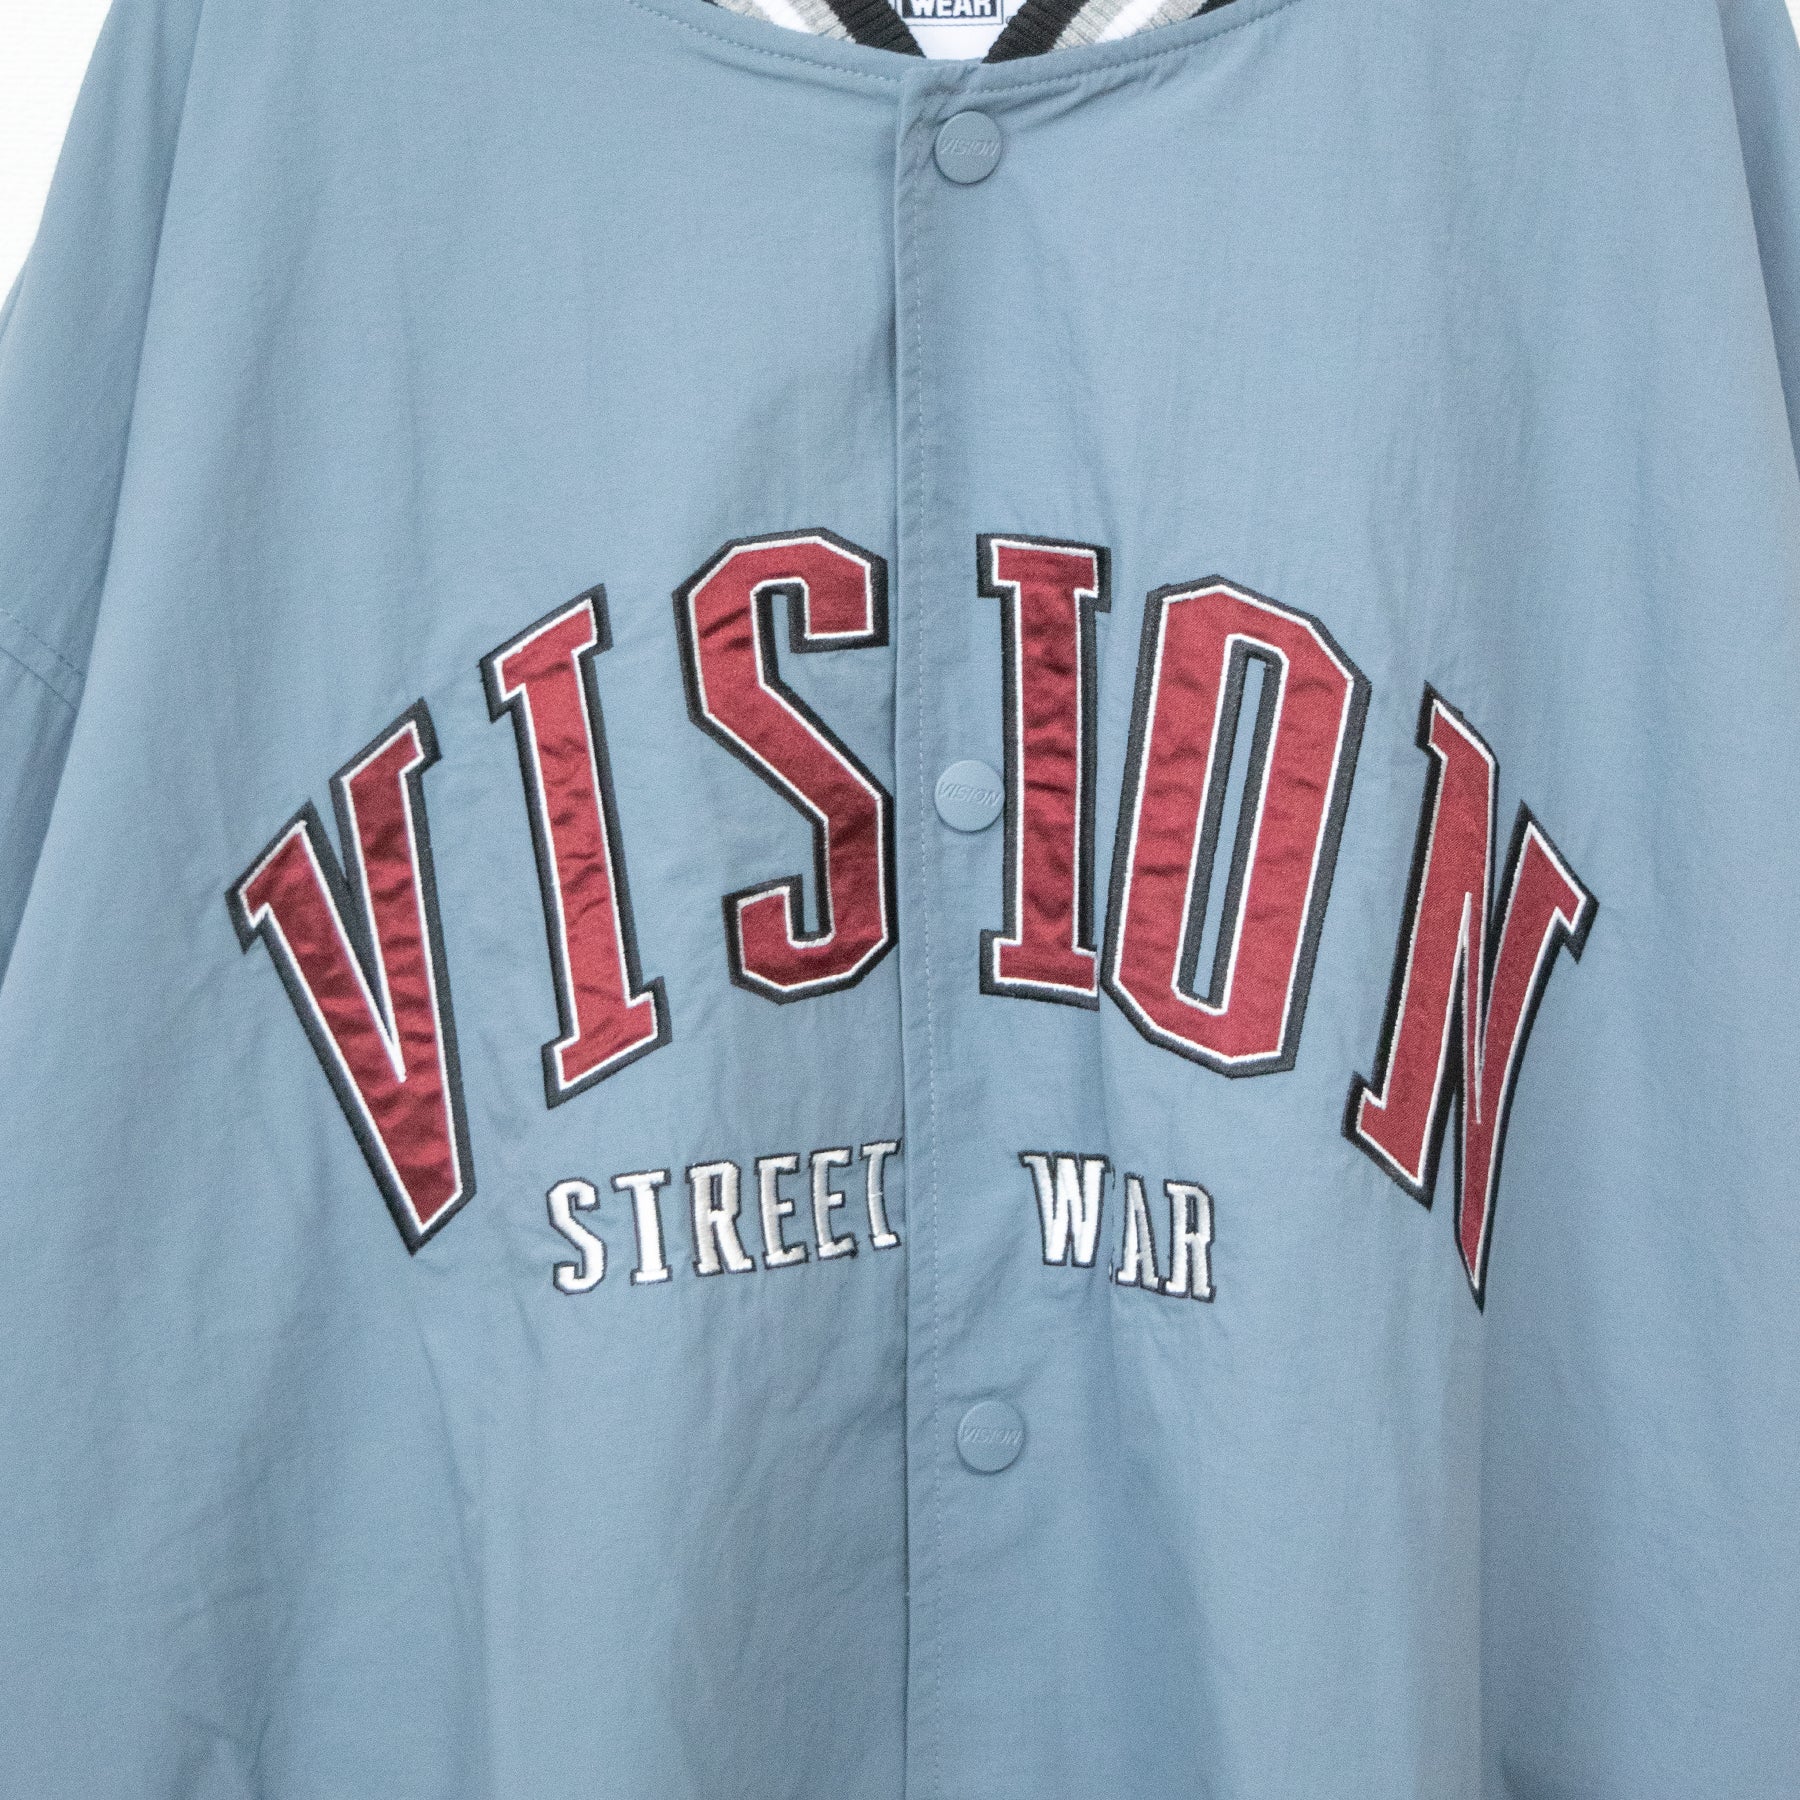 VISION STREET WEAR Nylon Patch Stadium Jacket - YOUAREMYPOISON